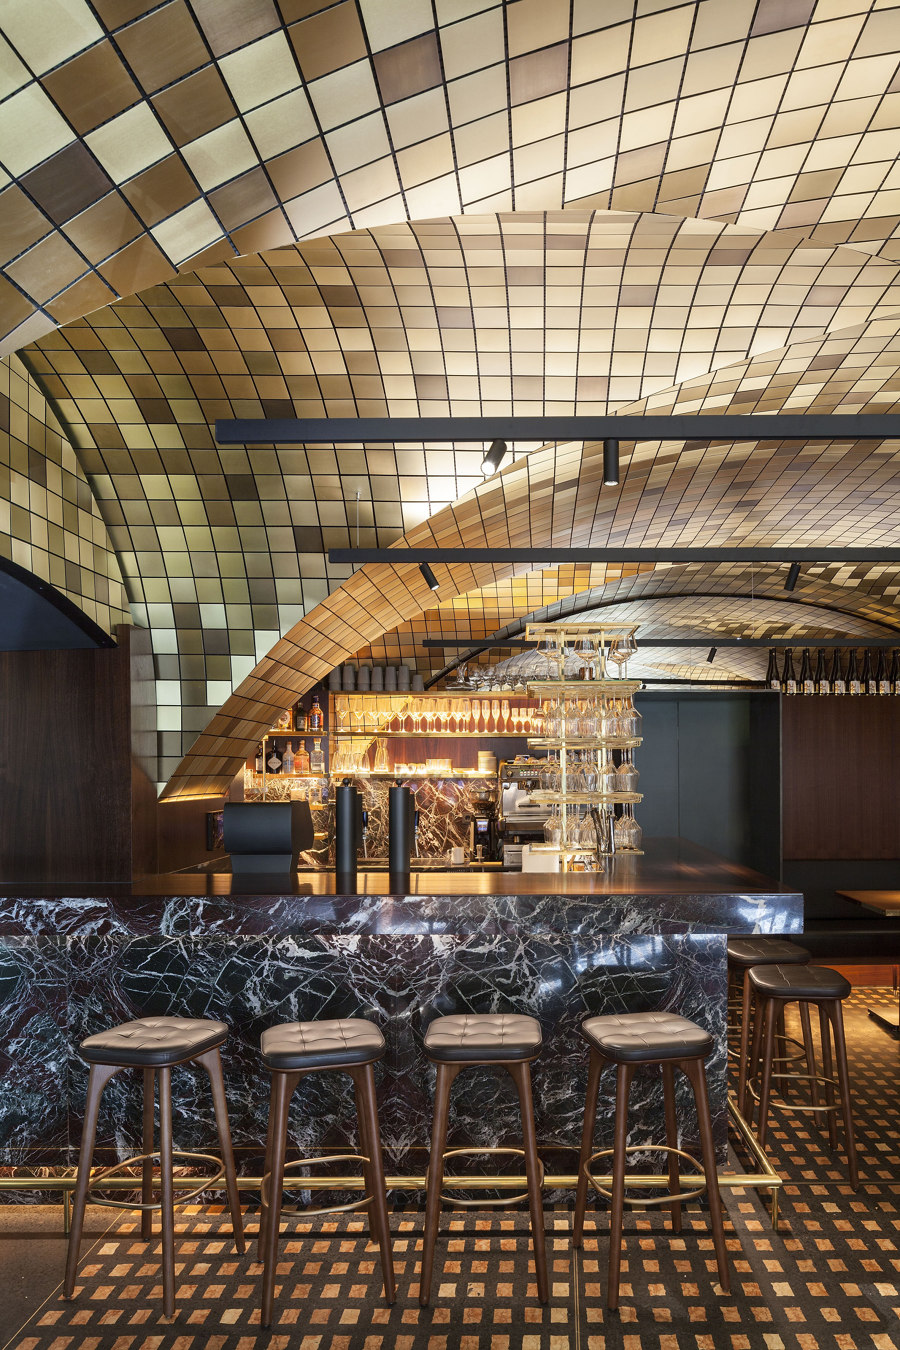 Koller + Koller am Waagplatz Restaurant by BEHF Architects | Restaurant interiors